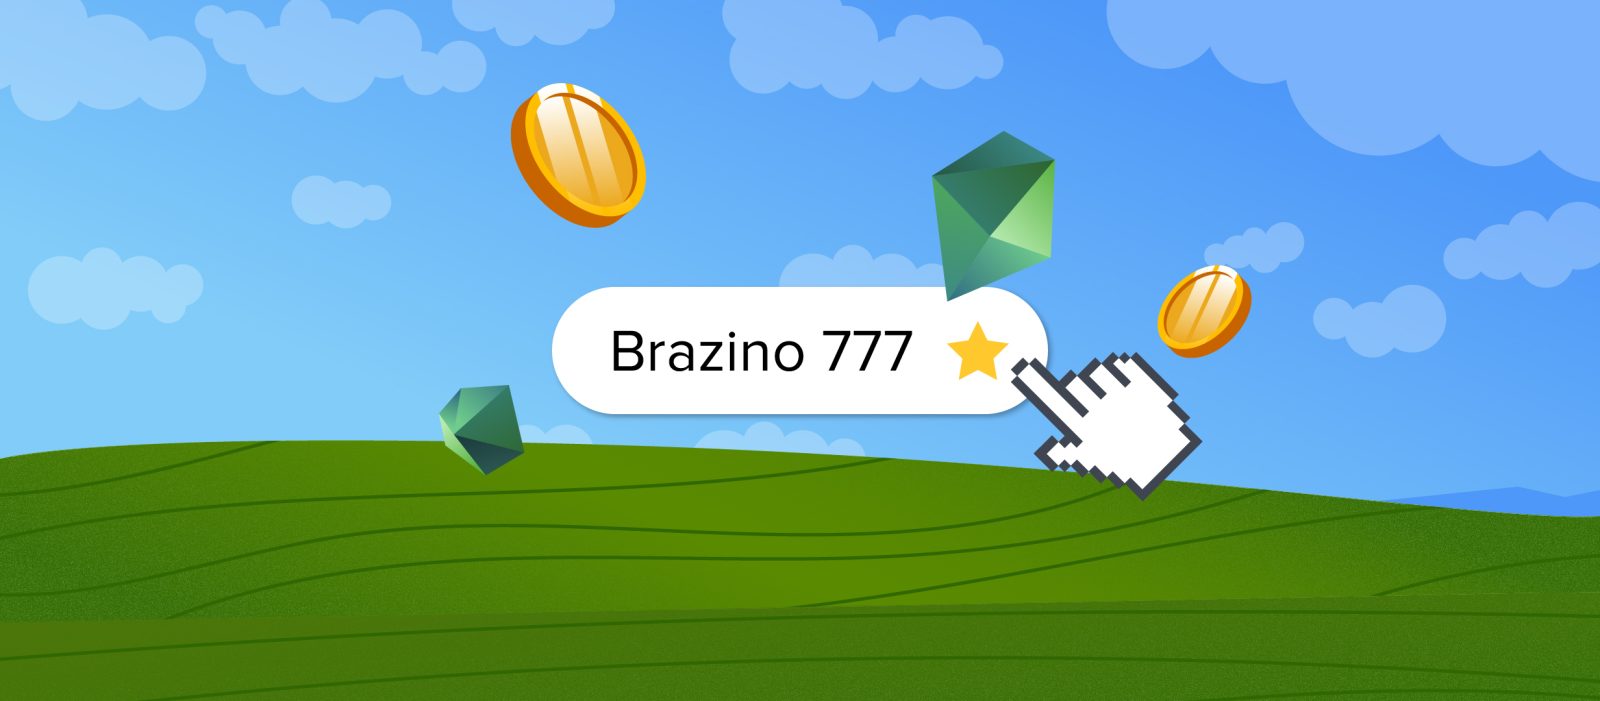 Brazino777 Brazil